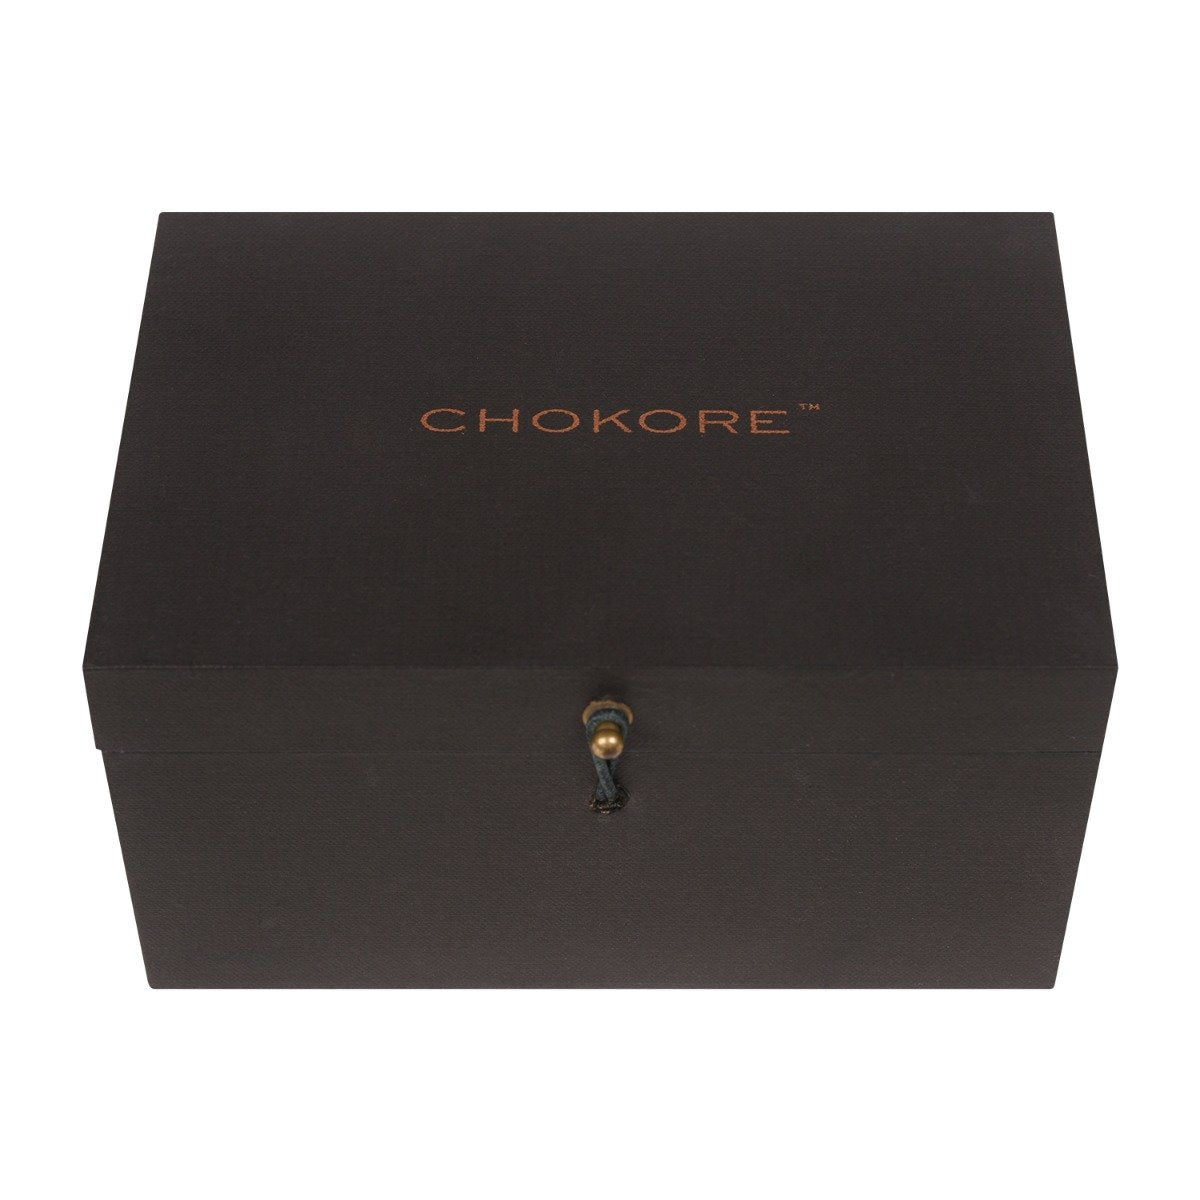 Chokore Black color 3-in-1 Gift set